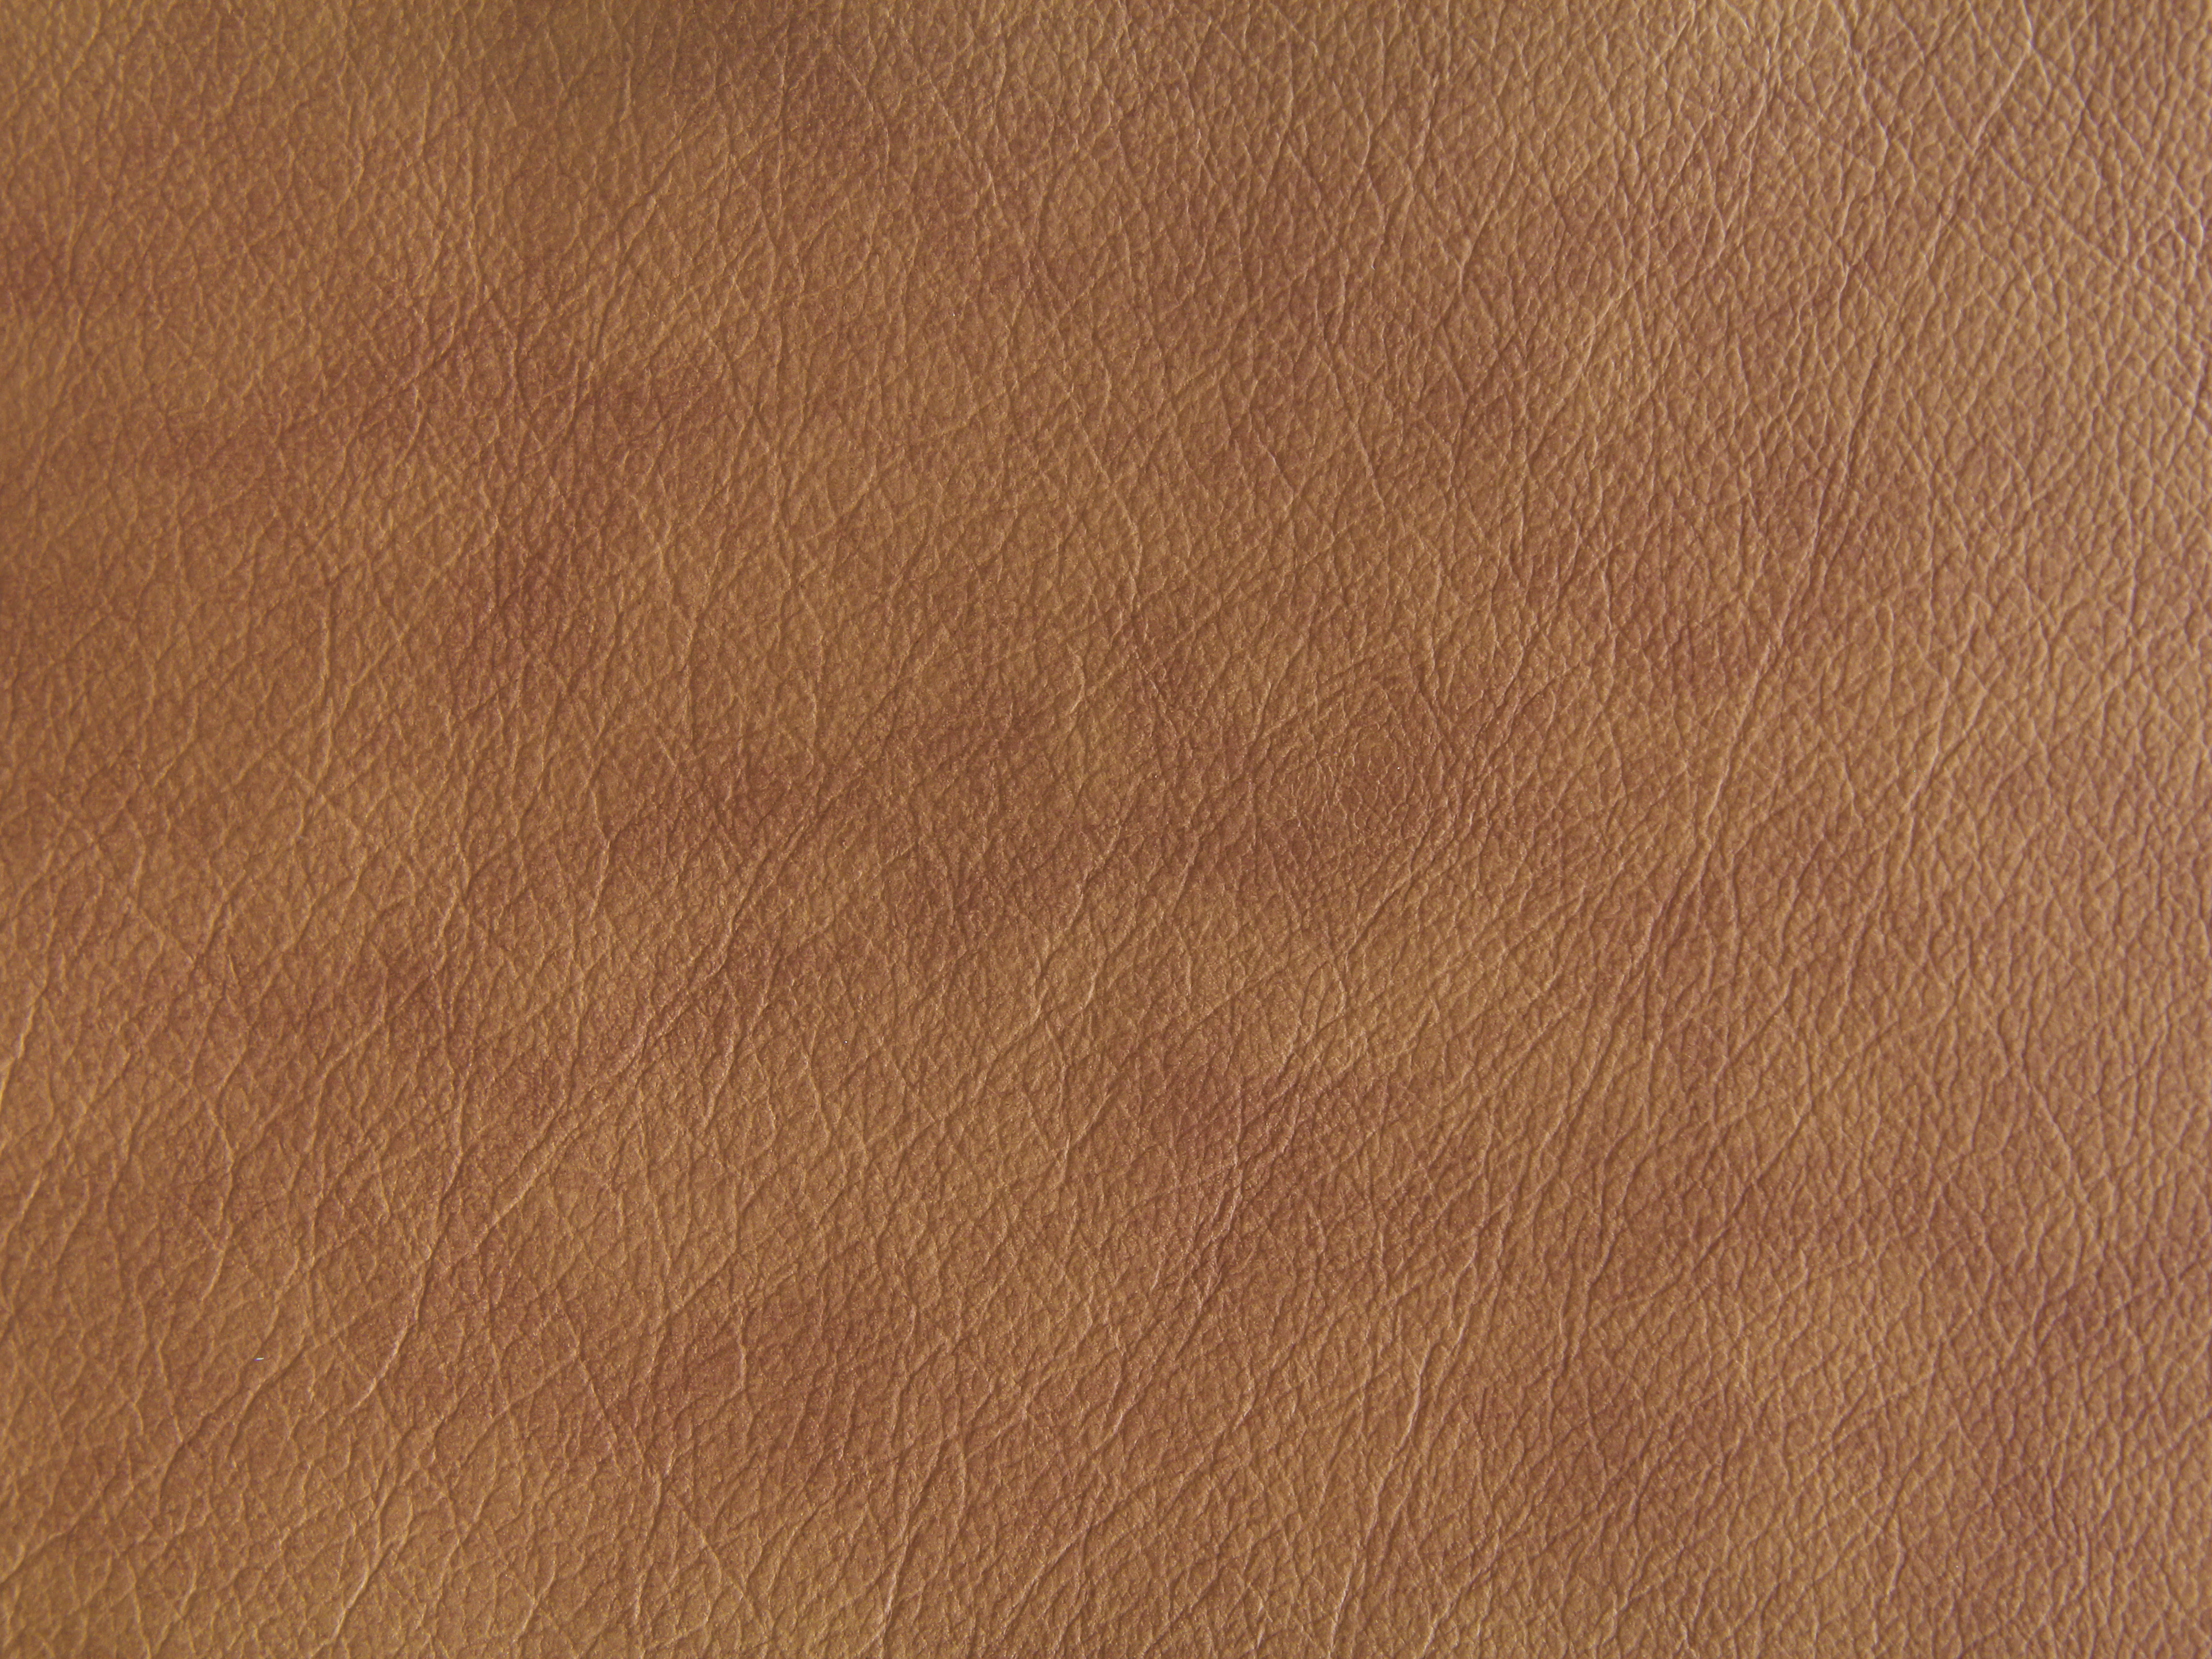 https://www.texturex.com/wp-content/uploads/2018/03/coudy-brown-leather-texture-wallpaper-fabric-stock-image-design-5.jpg